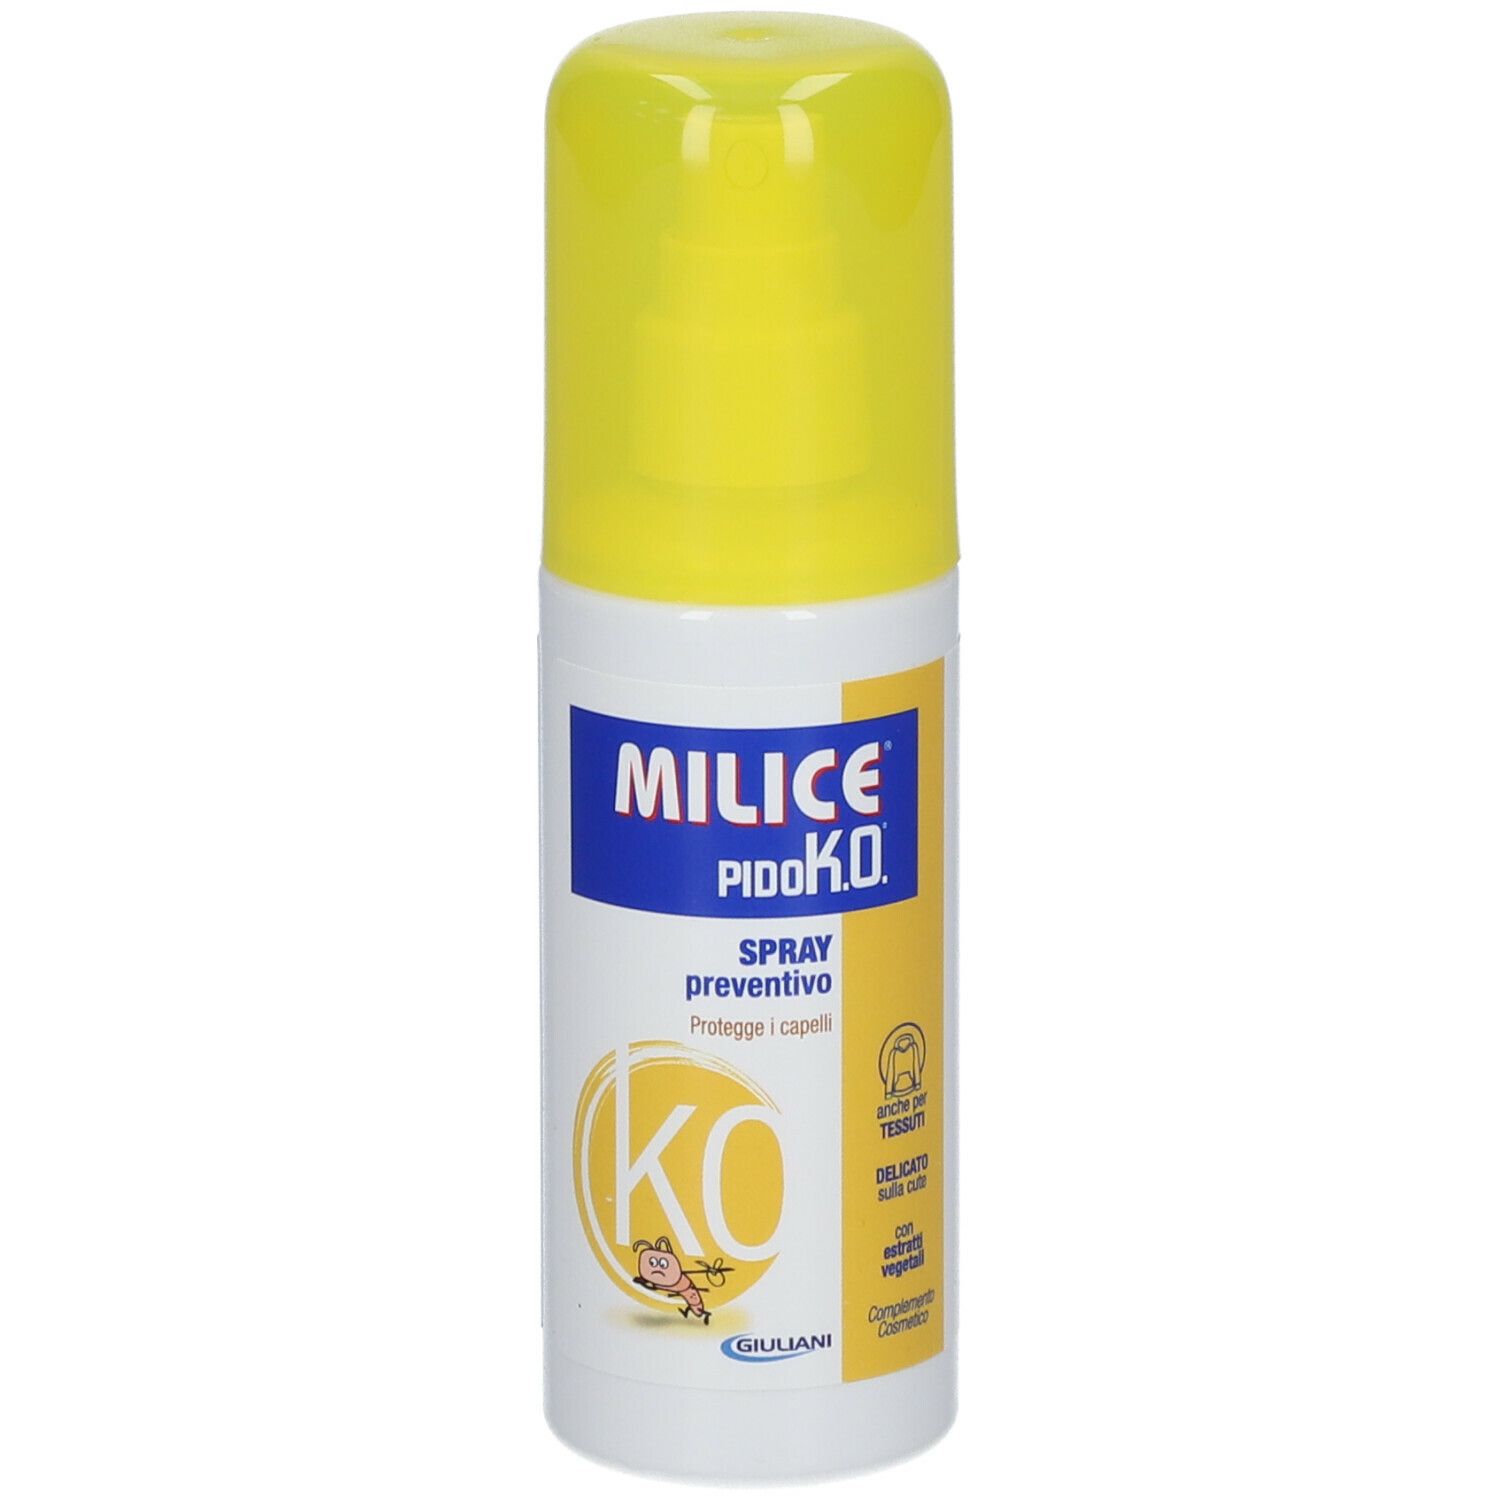 Milice® PidoK.O. Spray Preventivo 100 ml